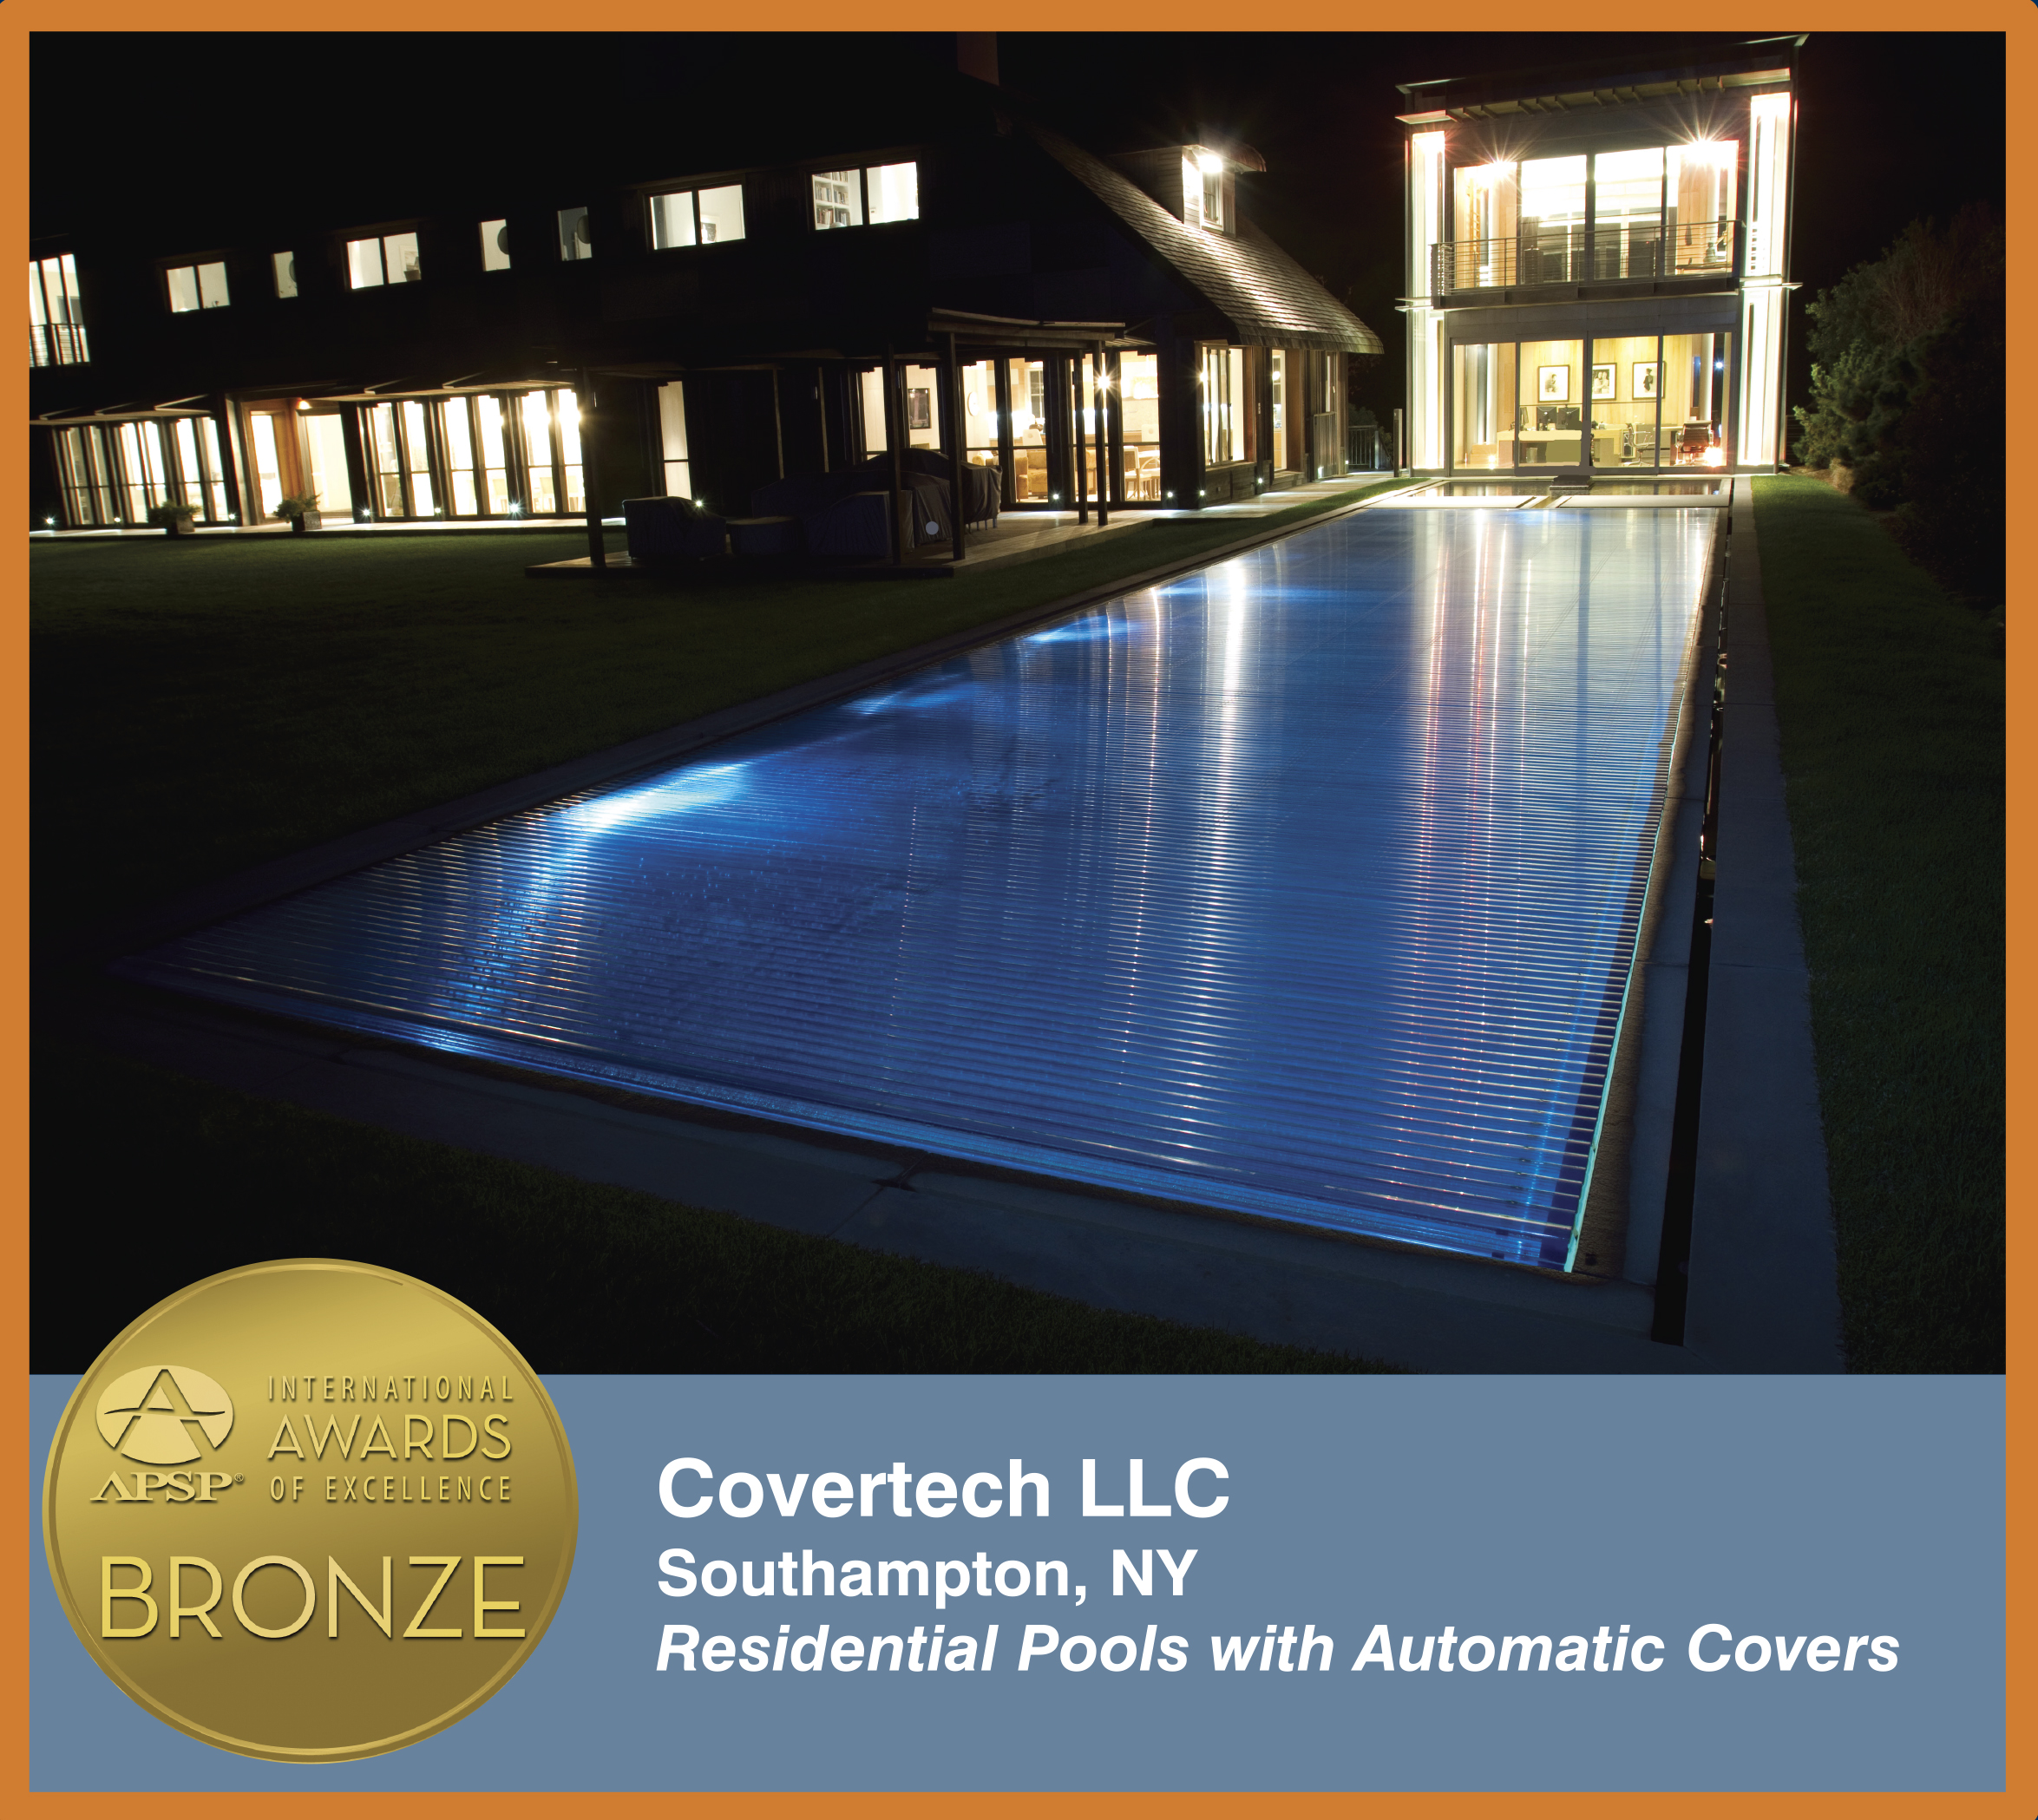 Covertech Grando automatic rigid slated pool cover International APSP Bronze2 Award 2014